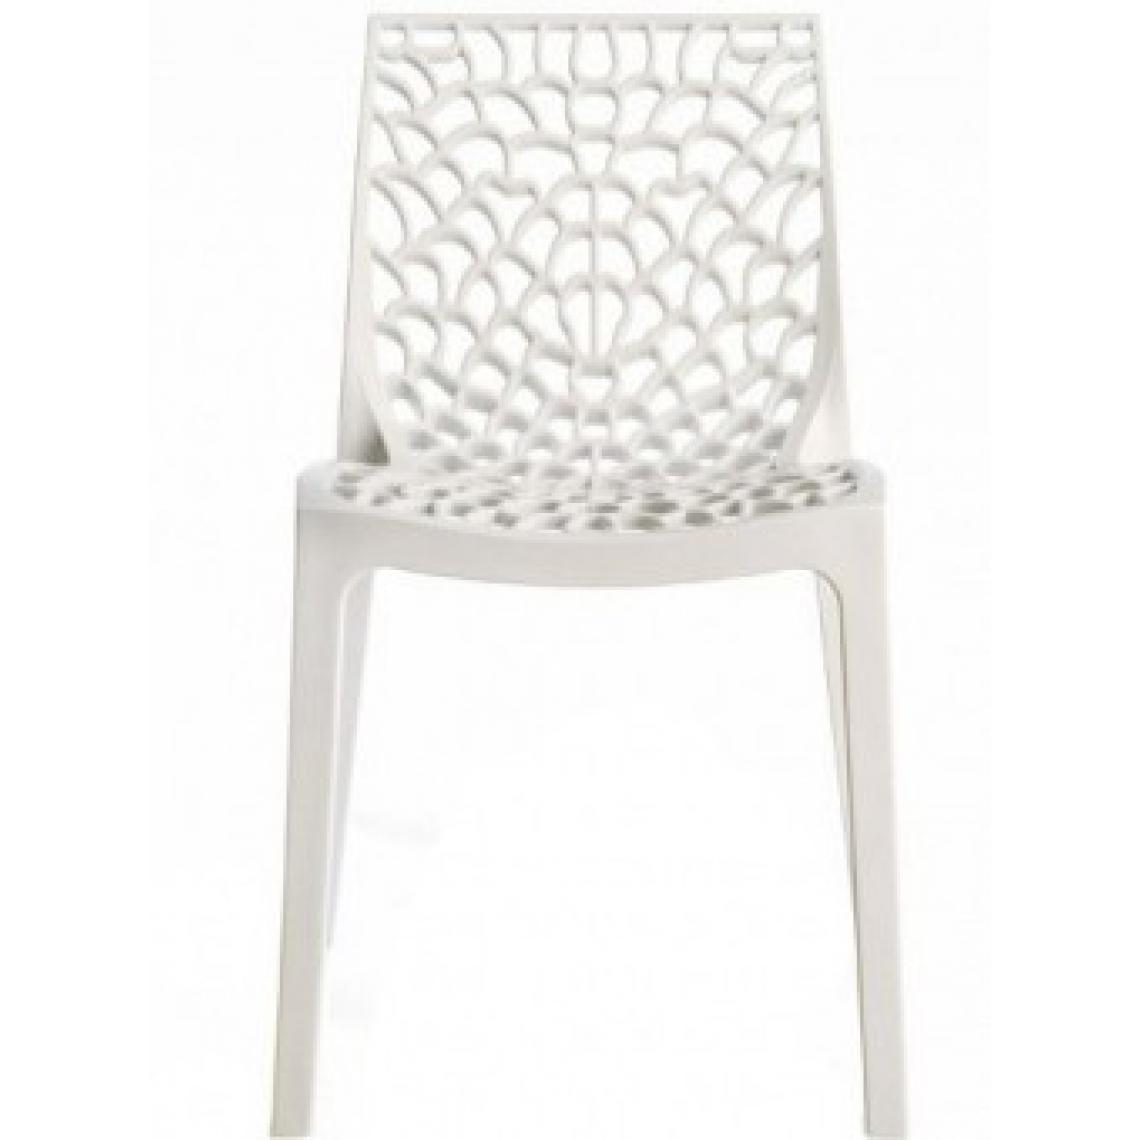 3S. x Home - Chaise Design Blanche GRUYER - Chaises